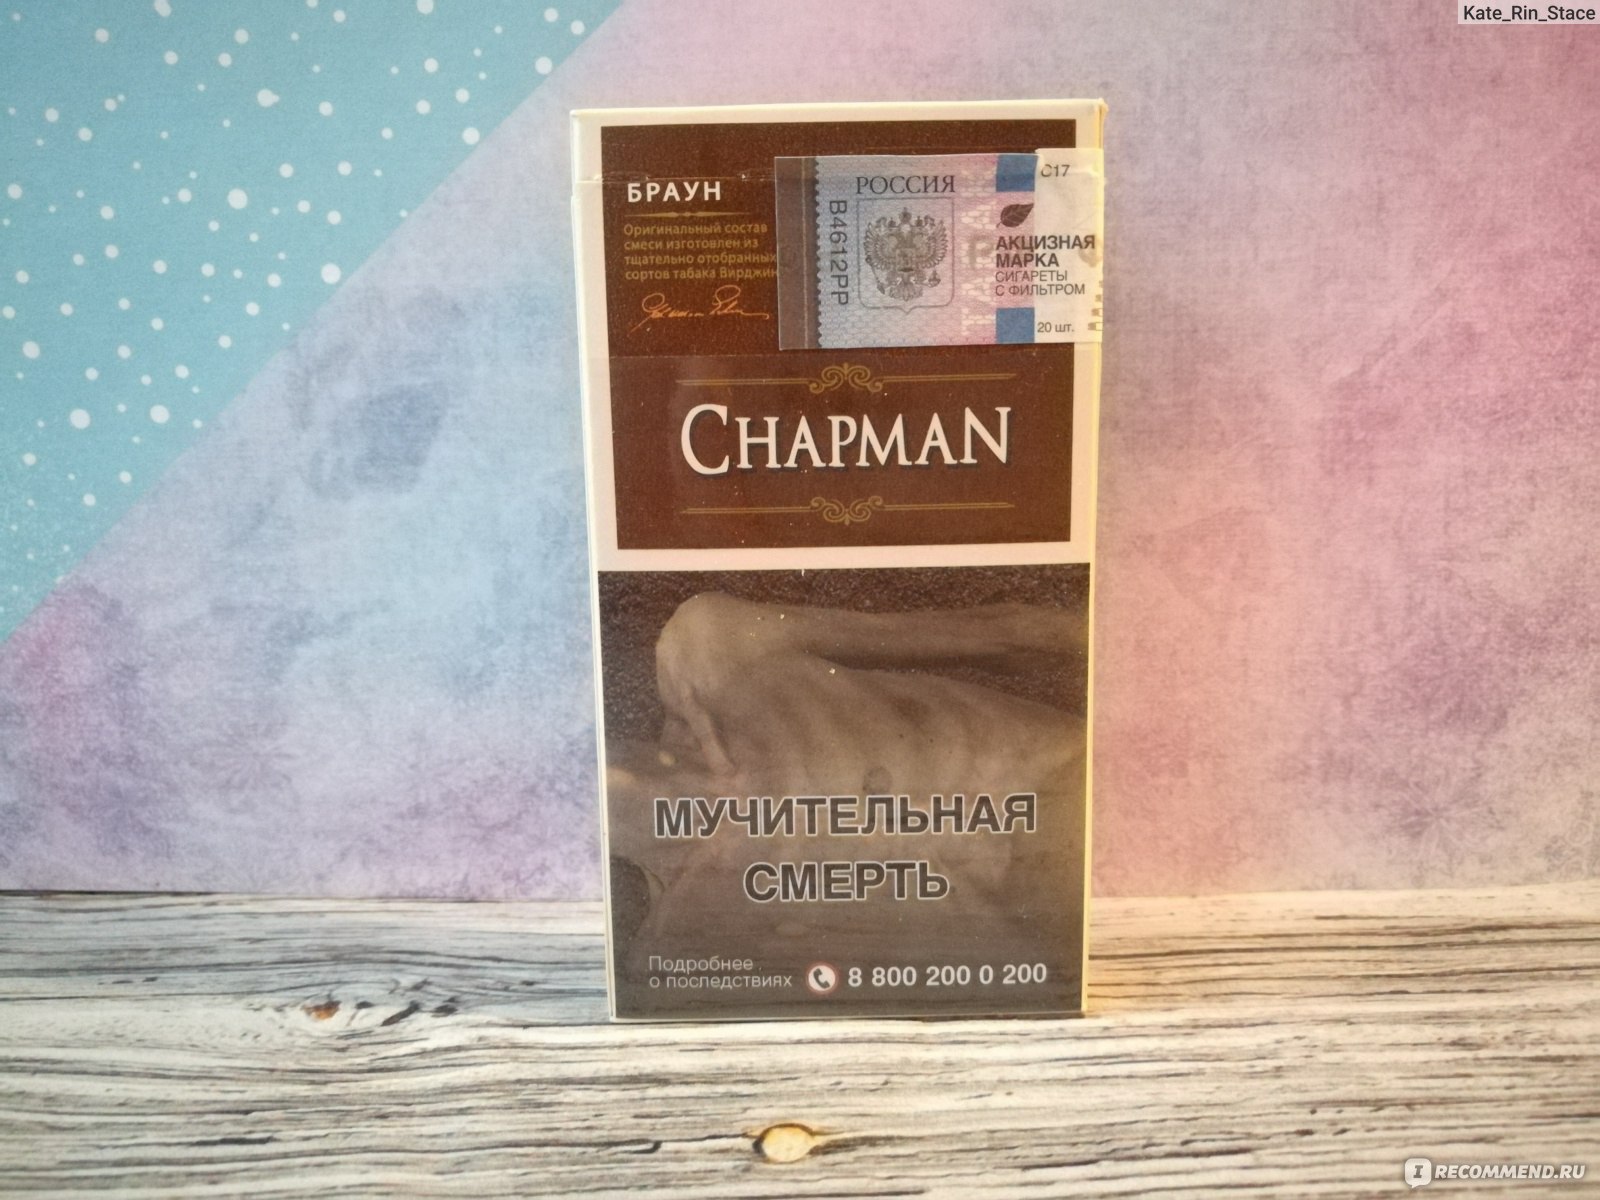 Chapman сигареты вкусы Браун